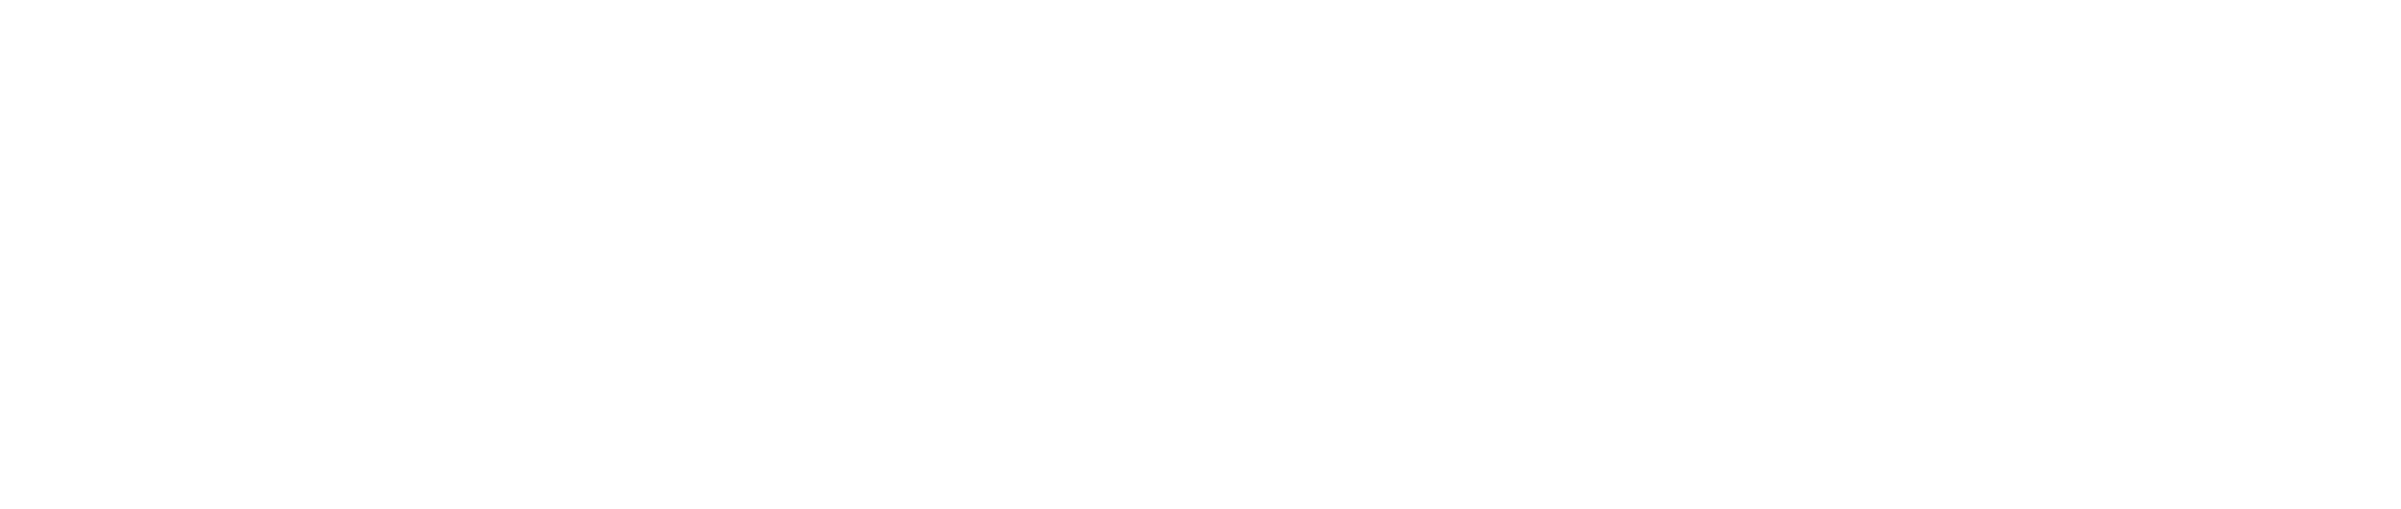 Australia Government Logo - Logo downloads | Australia Council